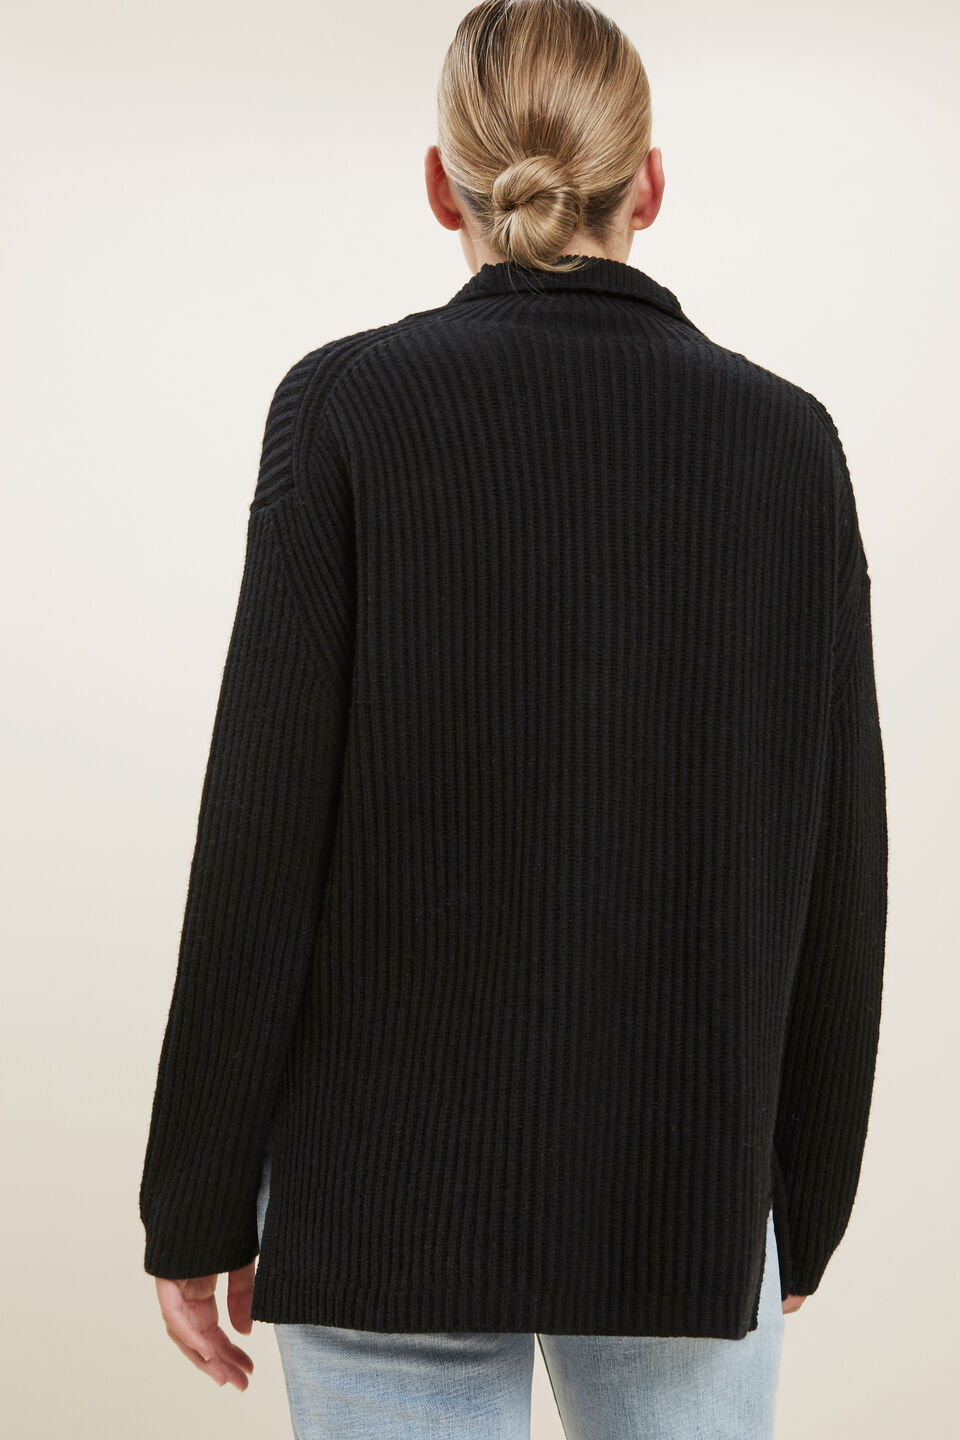 Longline Collared Sweater  Black  hi-res